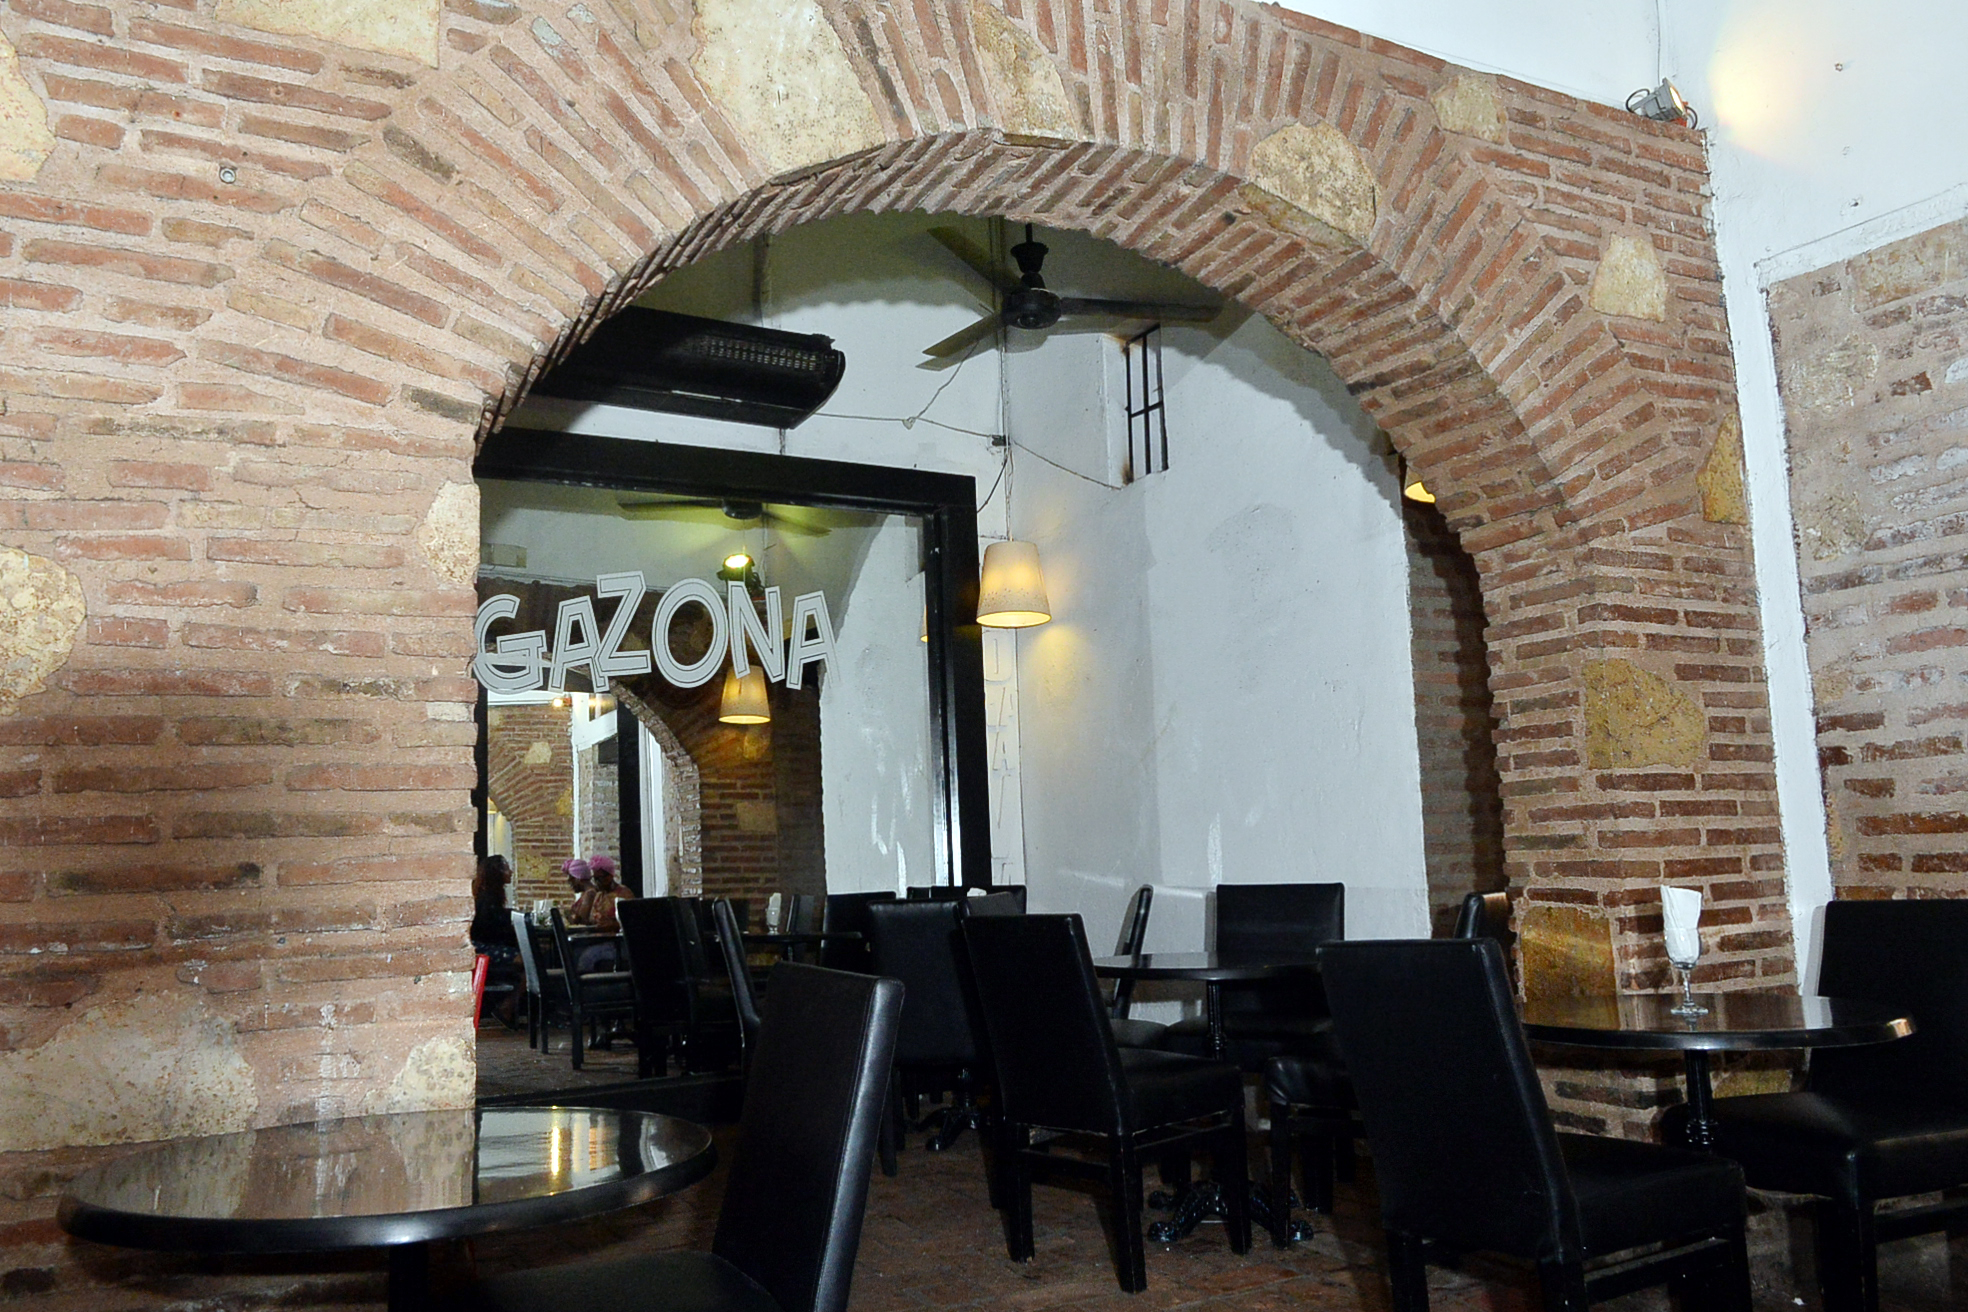 SegaZona:  Restaurante italiano que crece de boca en boca